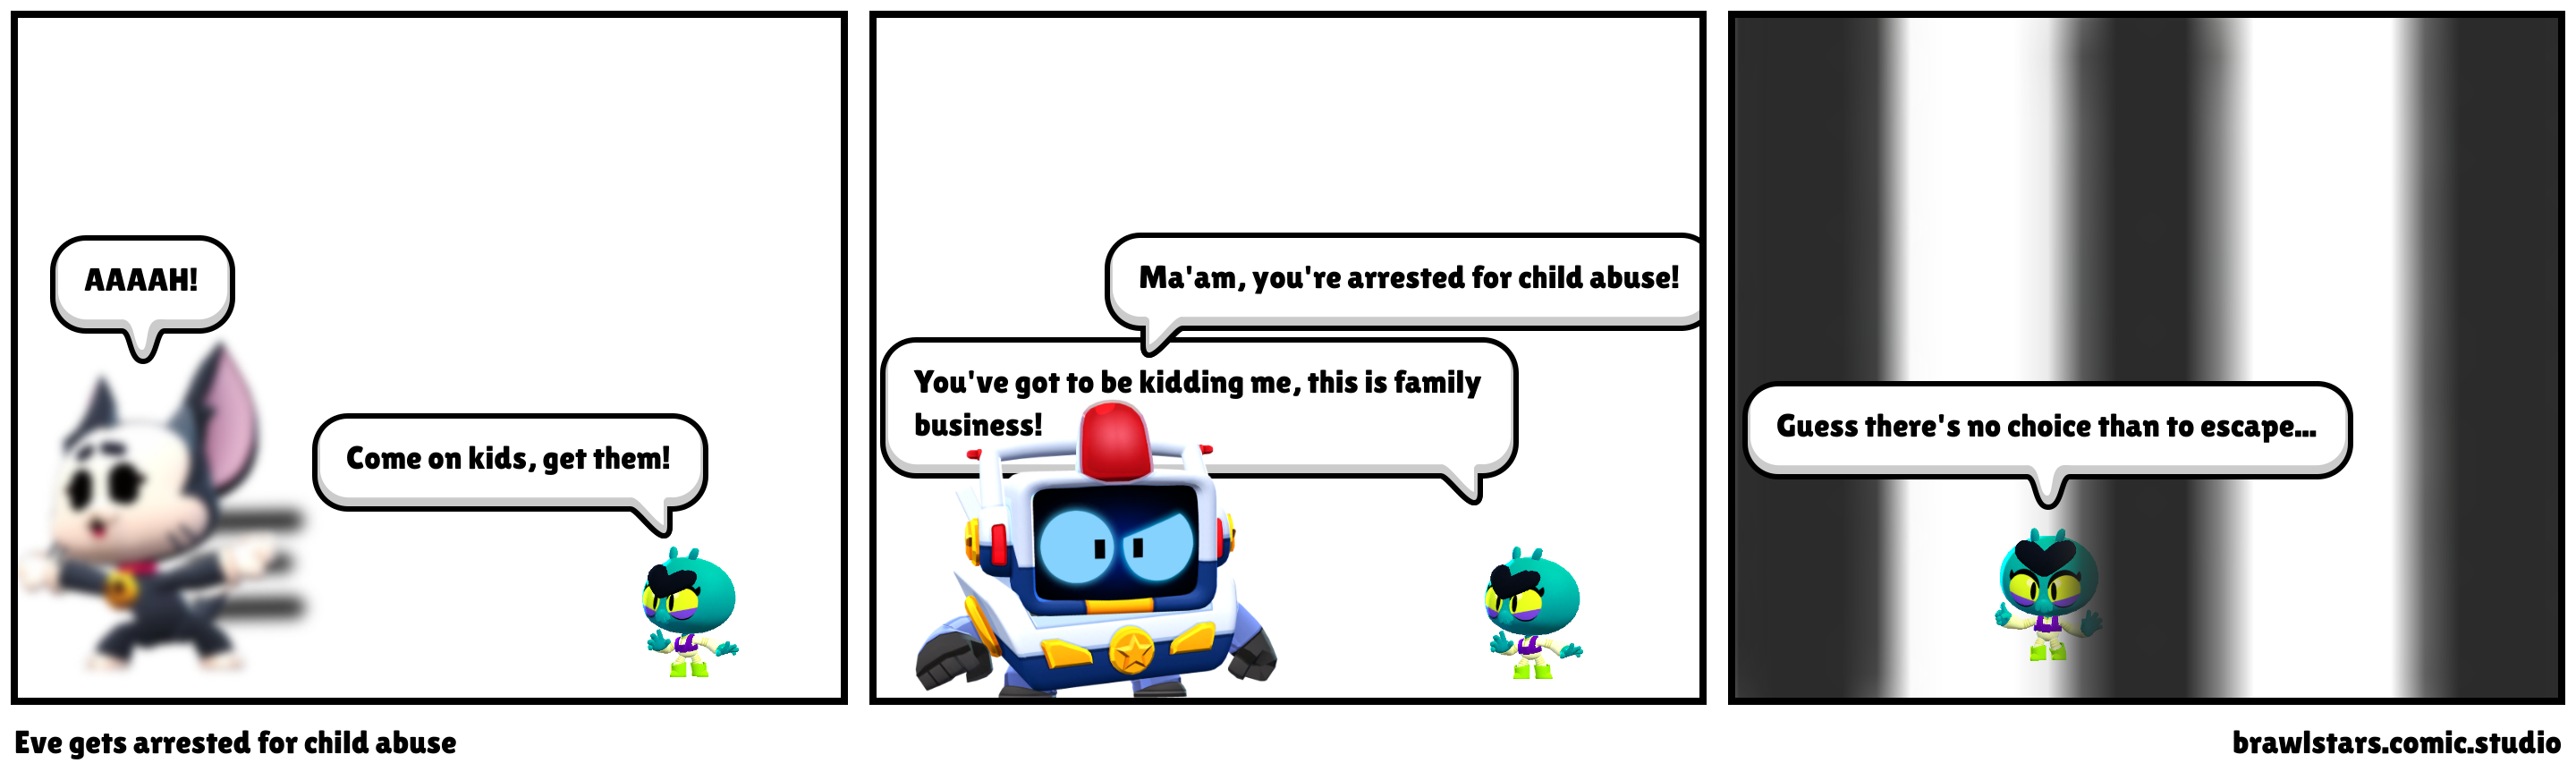 Eve gets arrested for child abuse